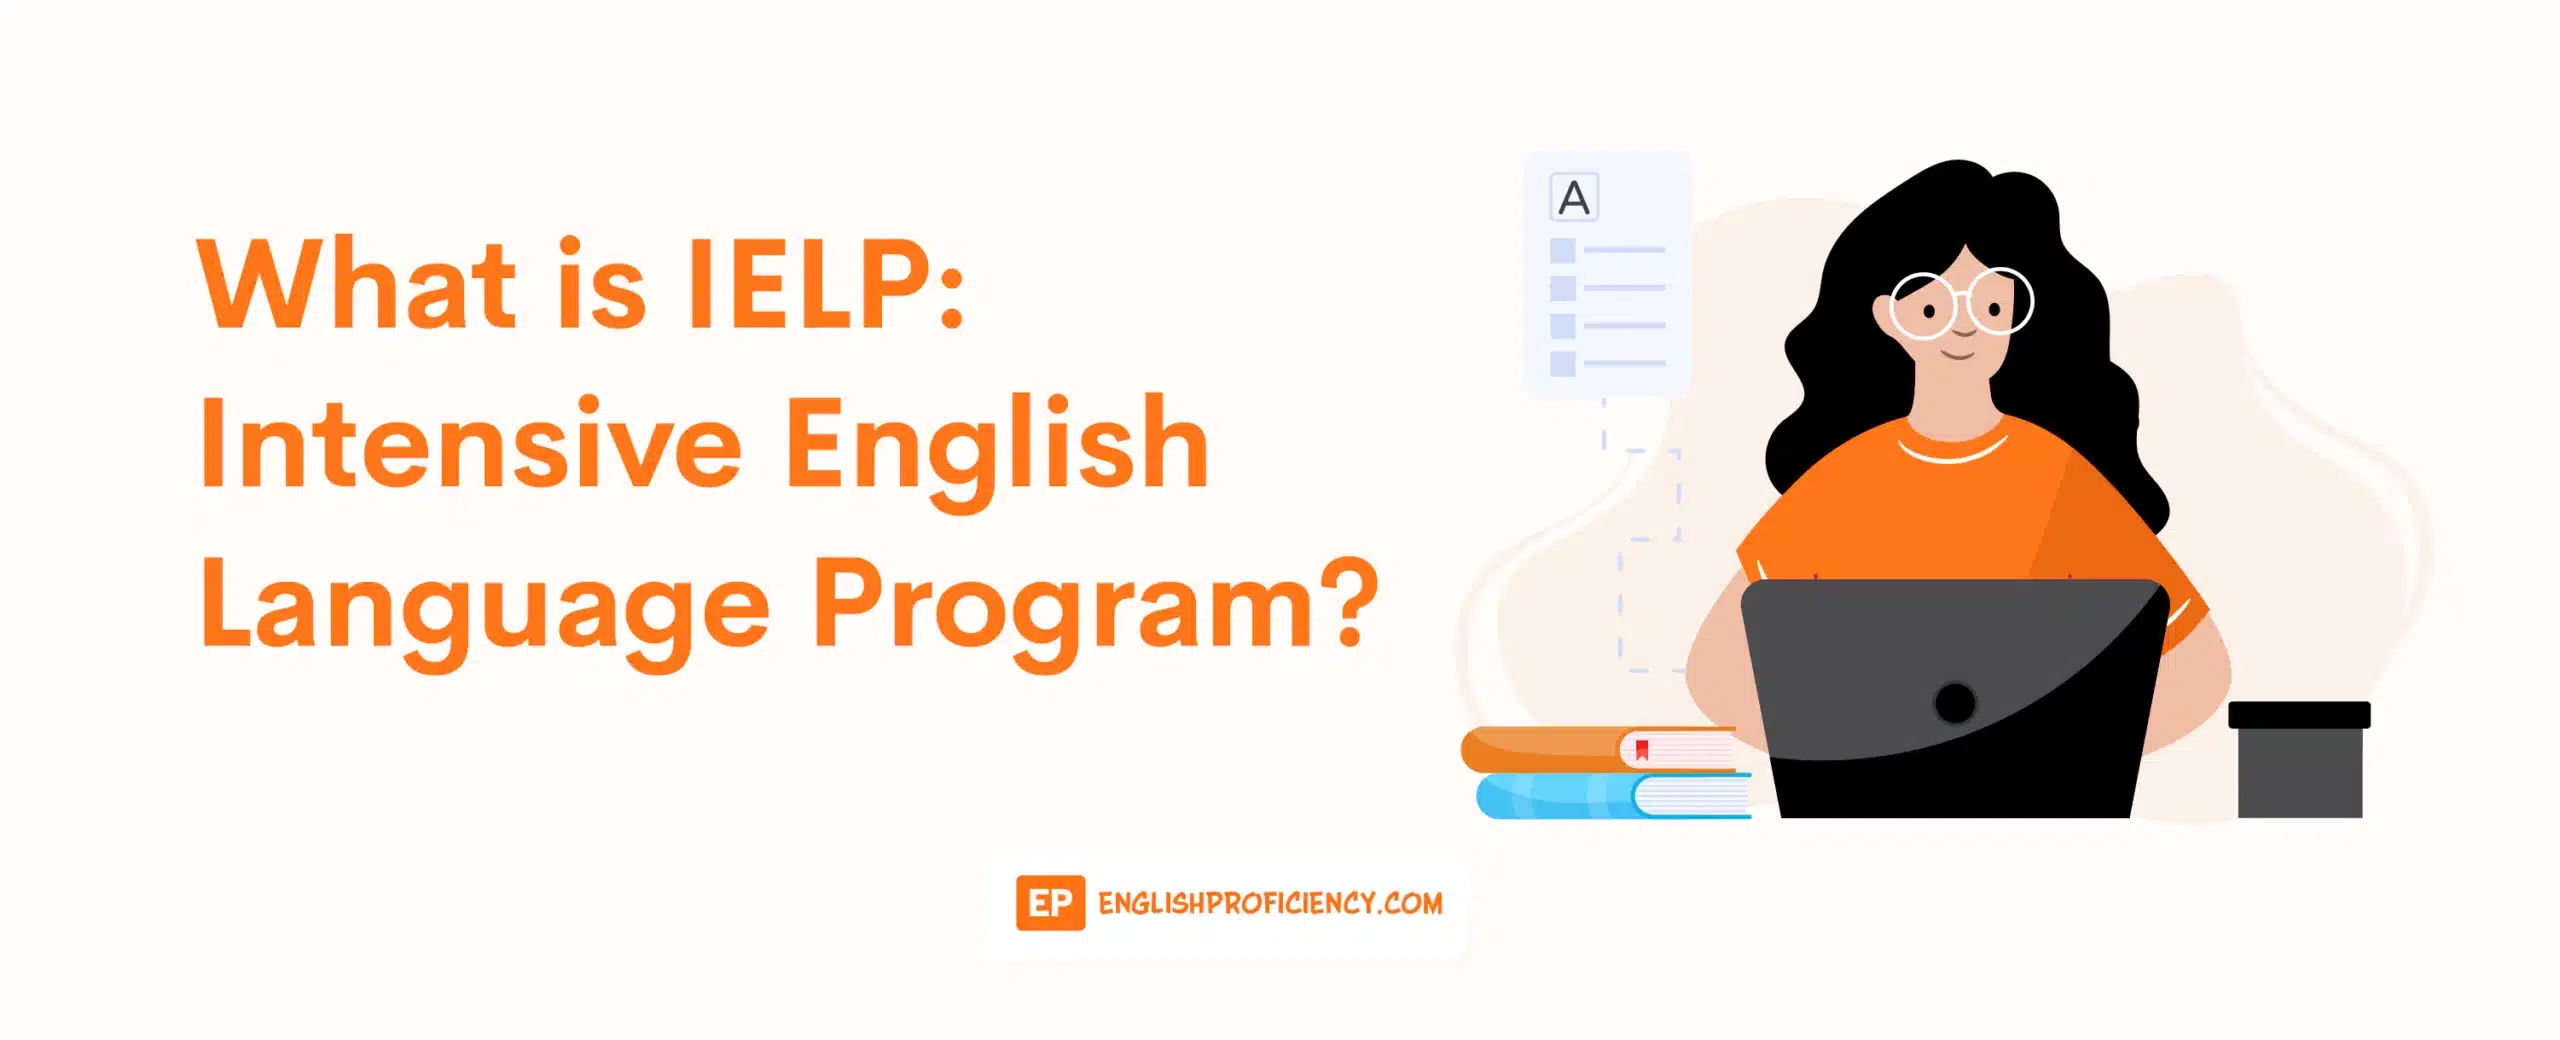 What is IELP Intensive English Language Program